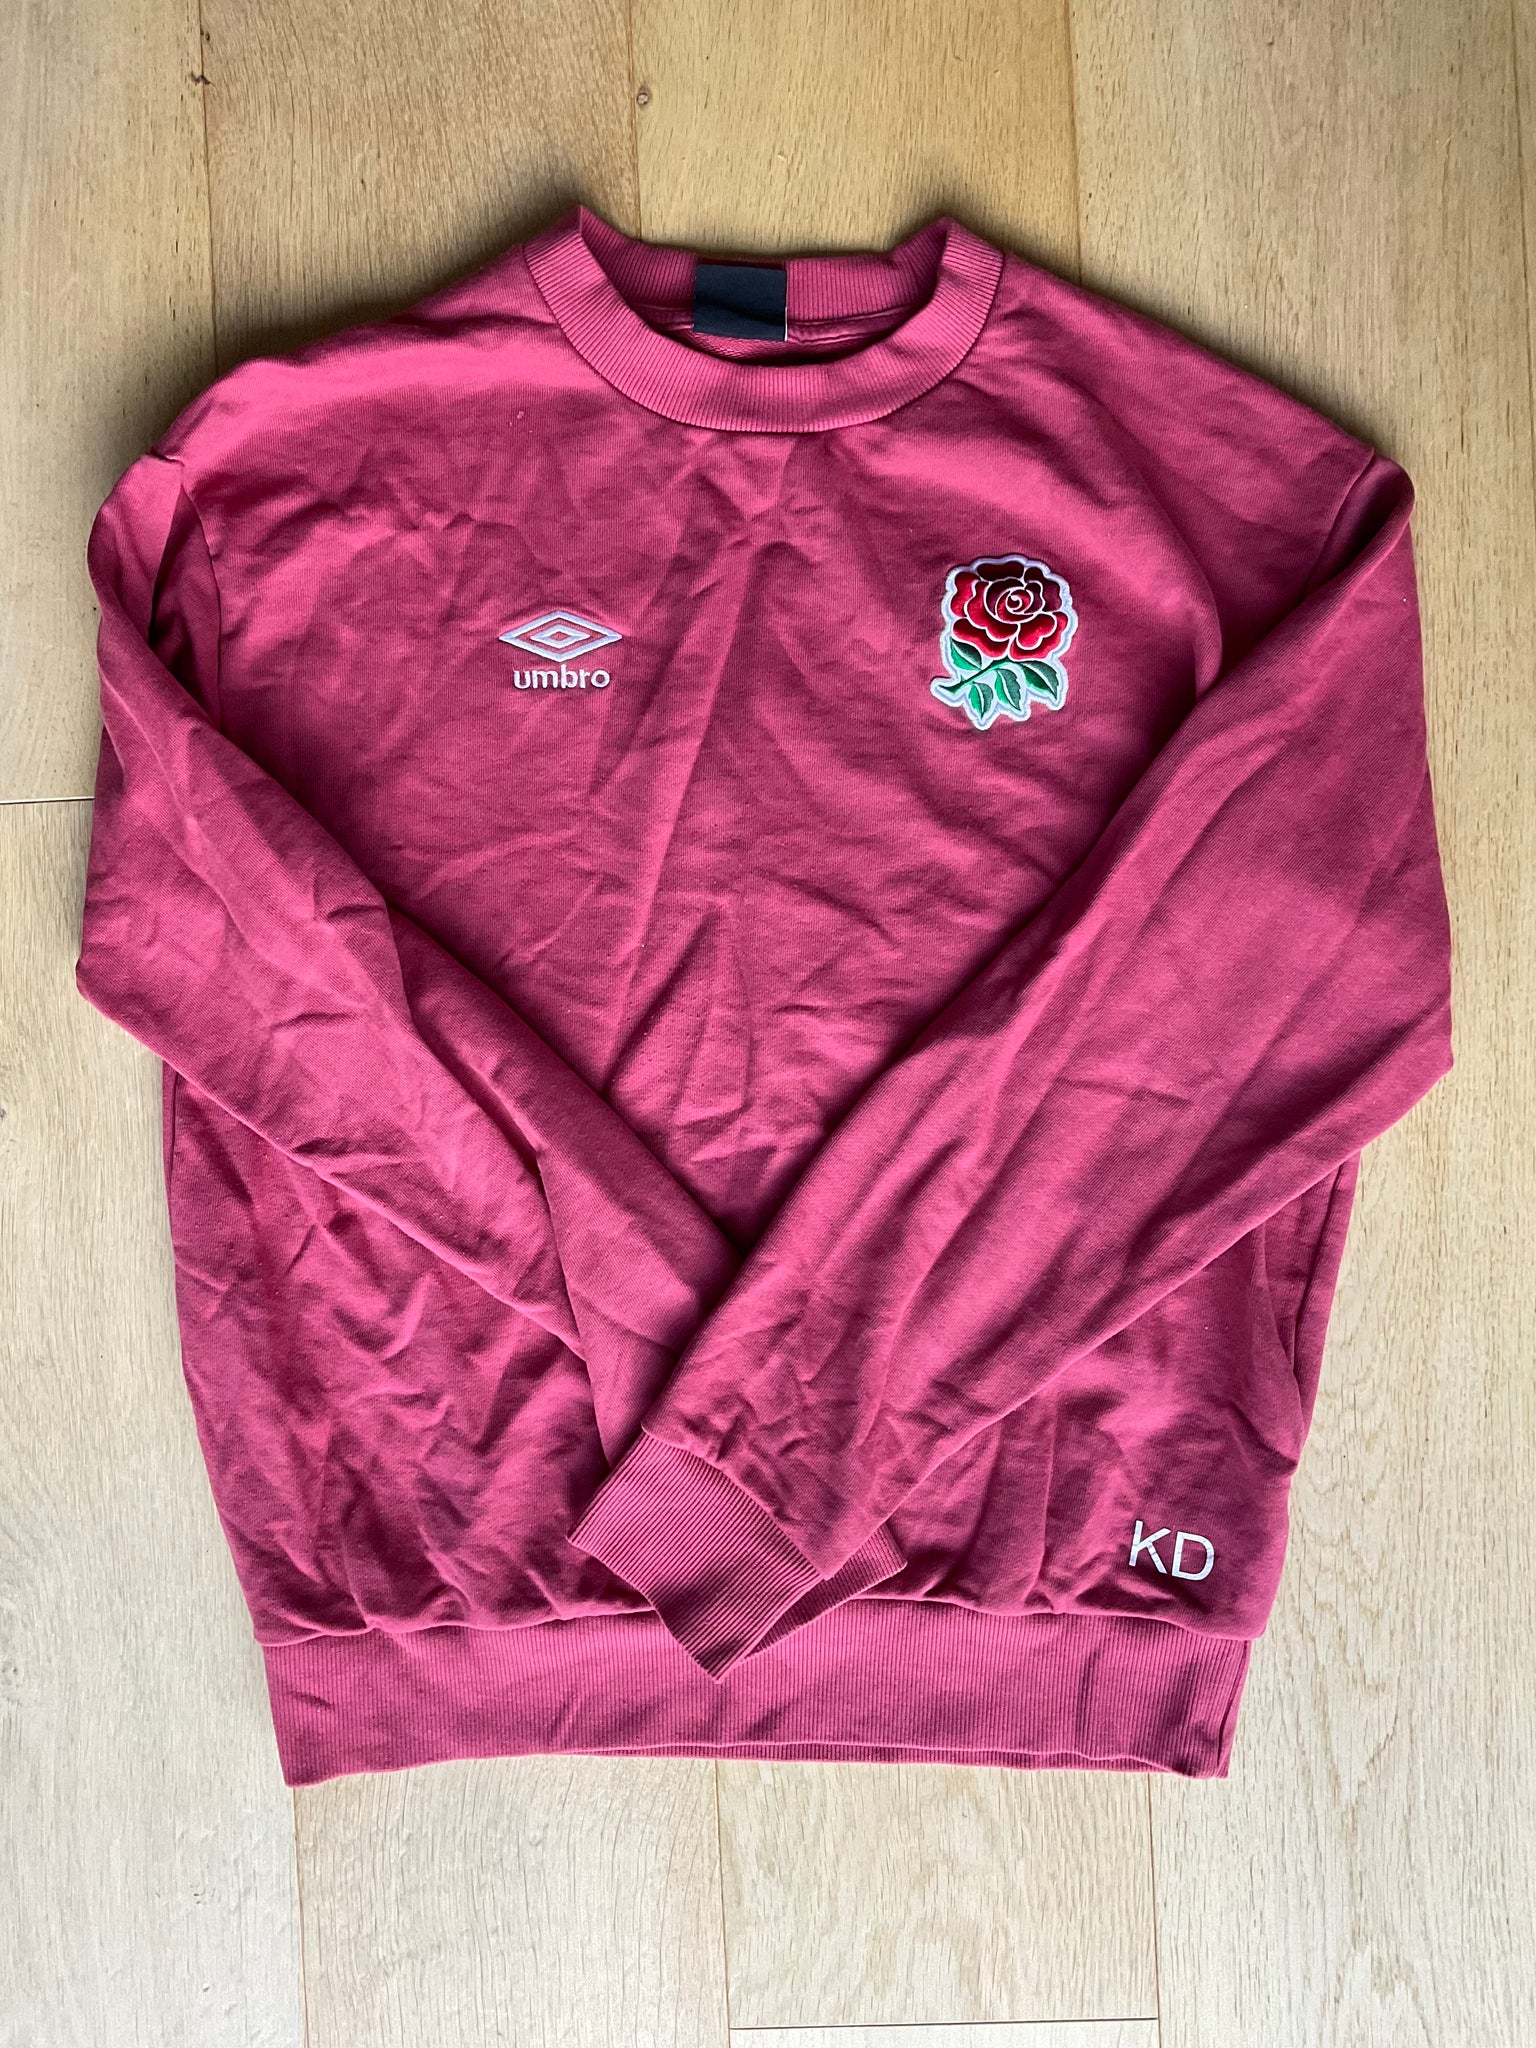 KD Initials - England Rugby Sweatshirt [Dusty Pink]